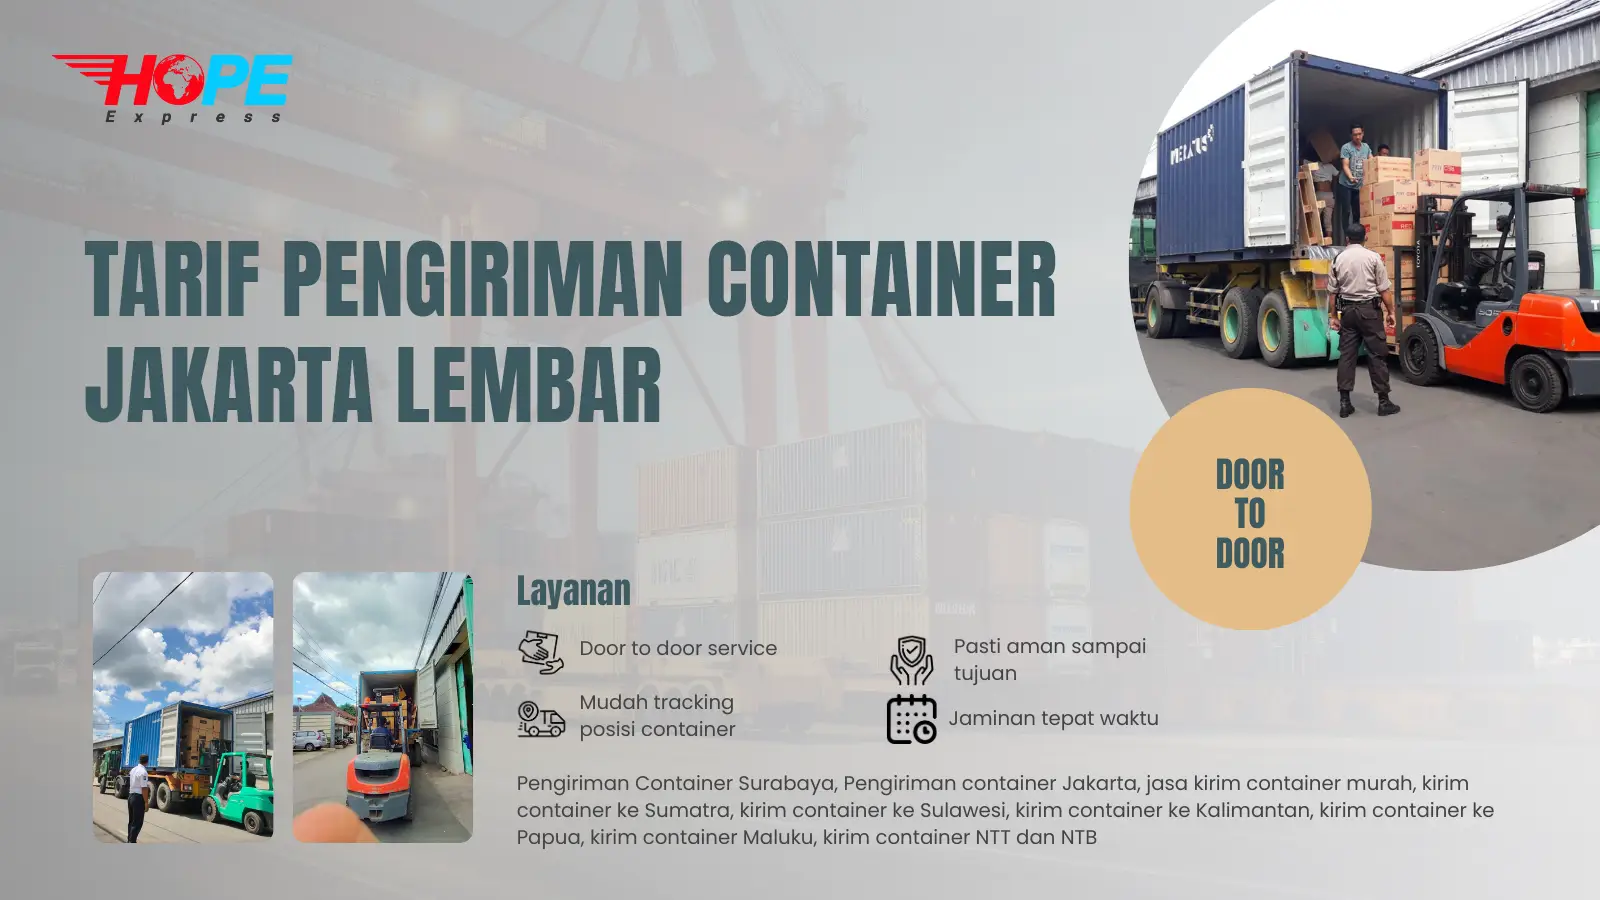 Tarif Pengiriman container Jakarta Lembar